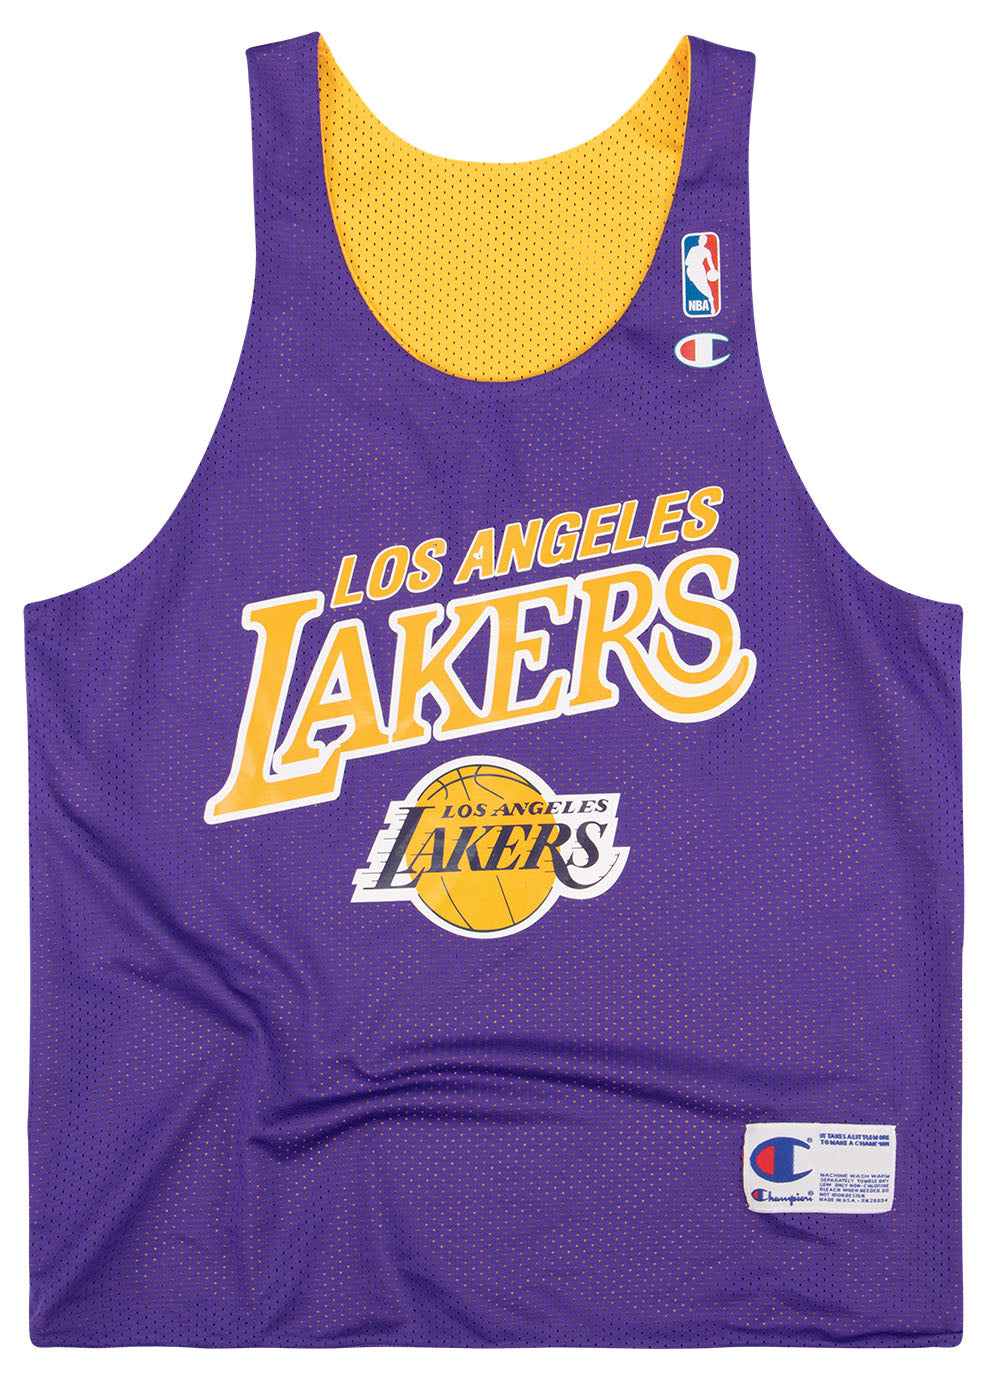 Kobe Bryant 8 Los Angeles Lakers Champion Vintage Jersey Size -  Sweden